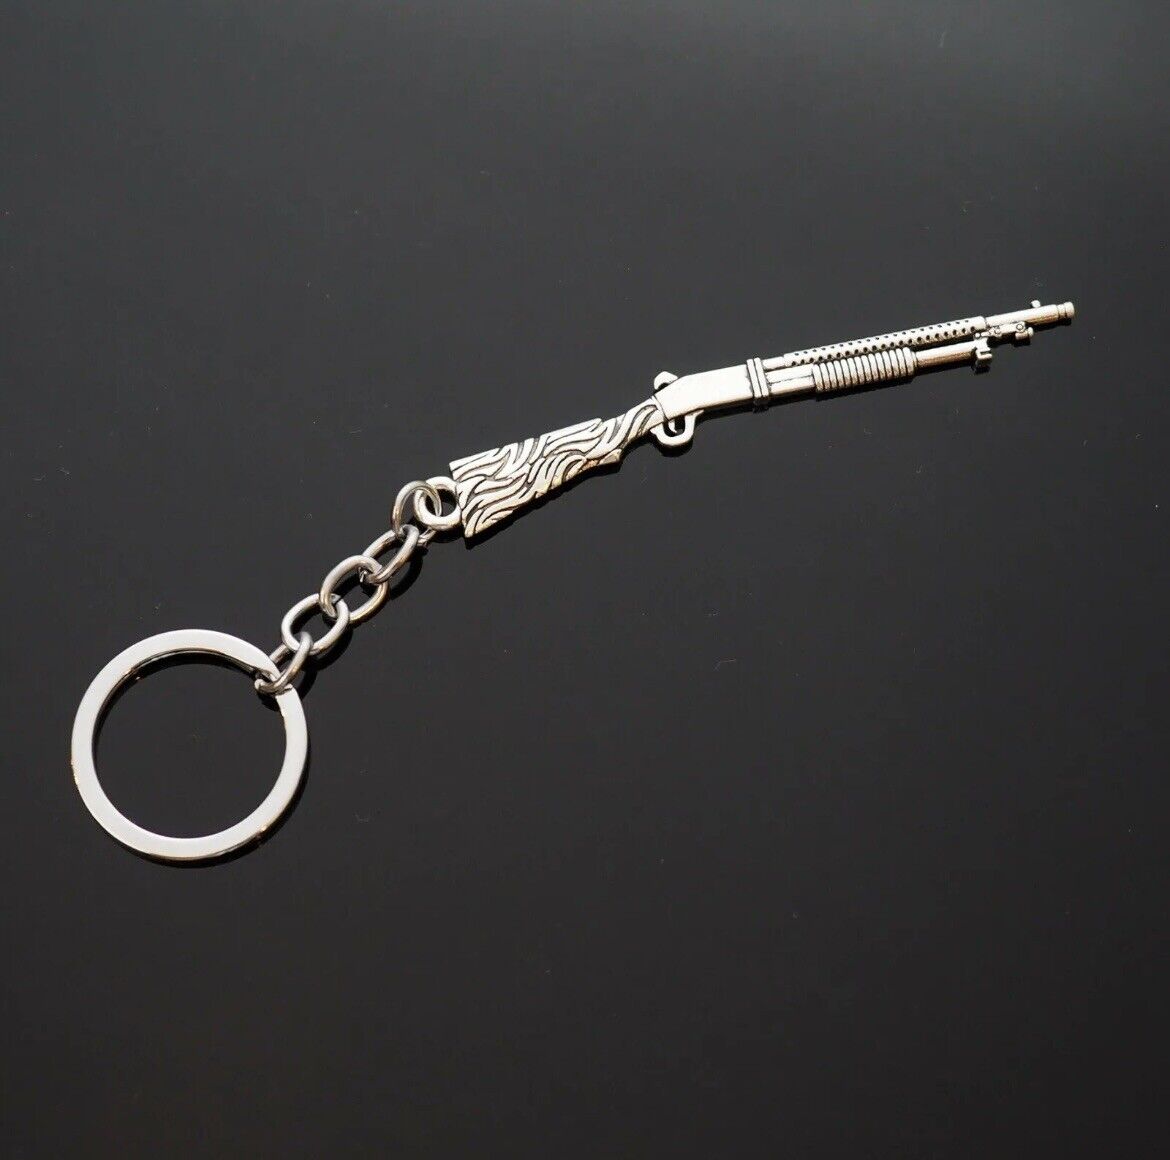 Shotgun Pistol Gun Bulldog Model Metal Keychain Mini Key Ring Chain Neckless